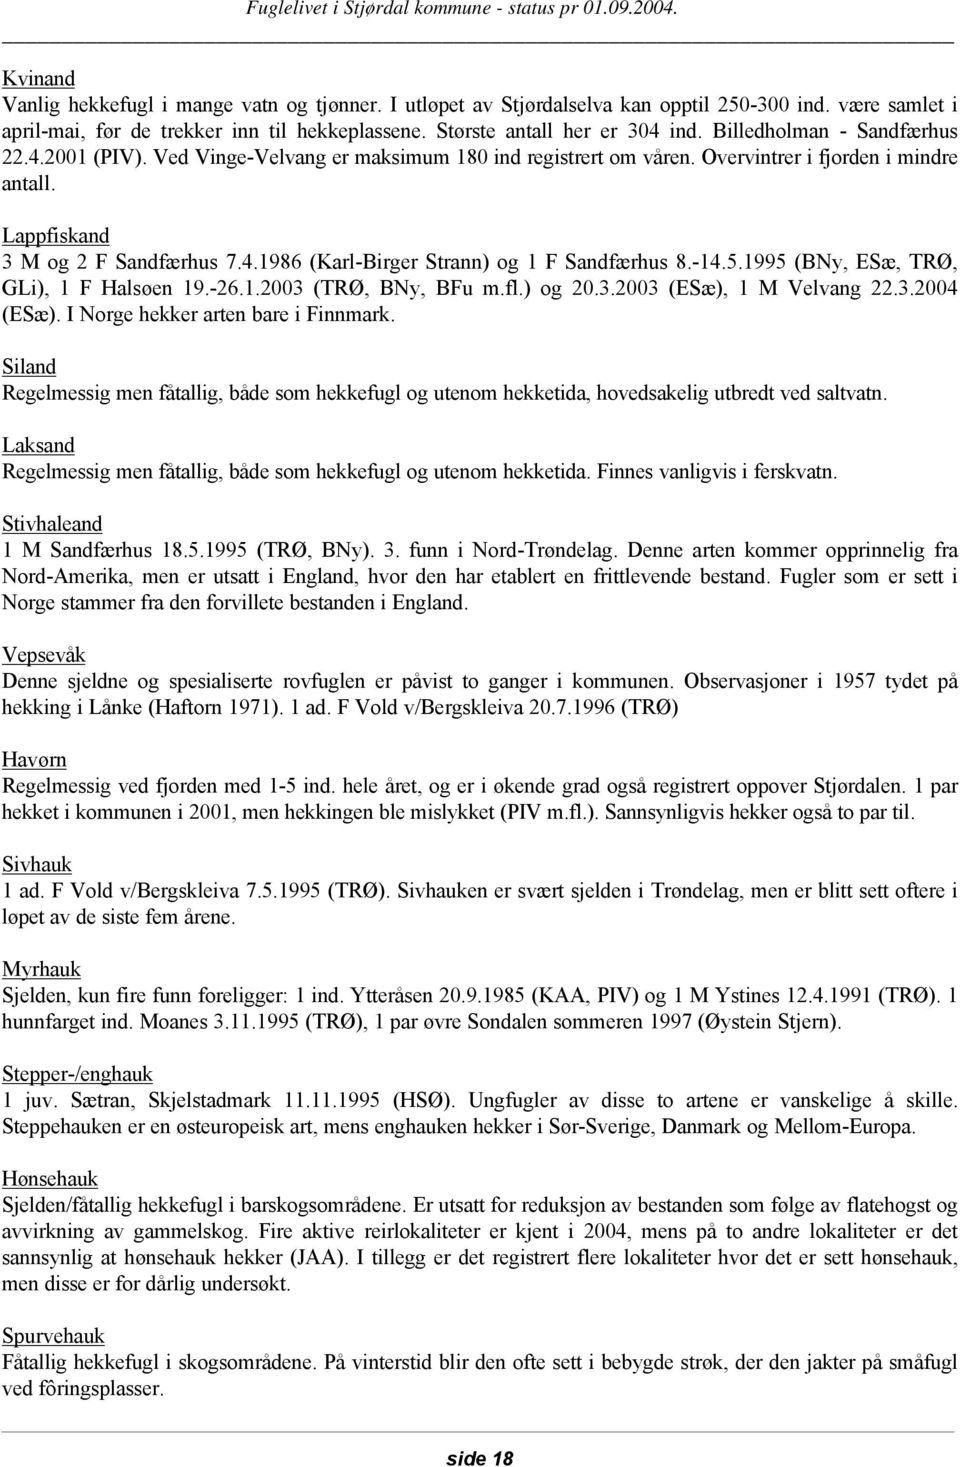 -14.5.1995 (BNy, ESæ, TRØ, GLi), 1 F Halsøen 19.-26.1.2003 (TRØ, BNy, BFu m.fl.) og 20.3.2003 (ESæ), 1 M Velvang 22.3.2004 (ESæ). I Norge hekker arten bare i Finnmark.